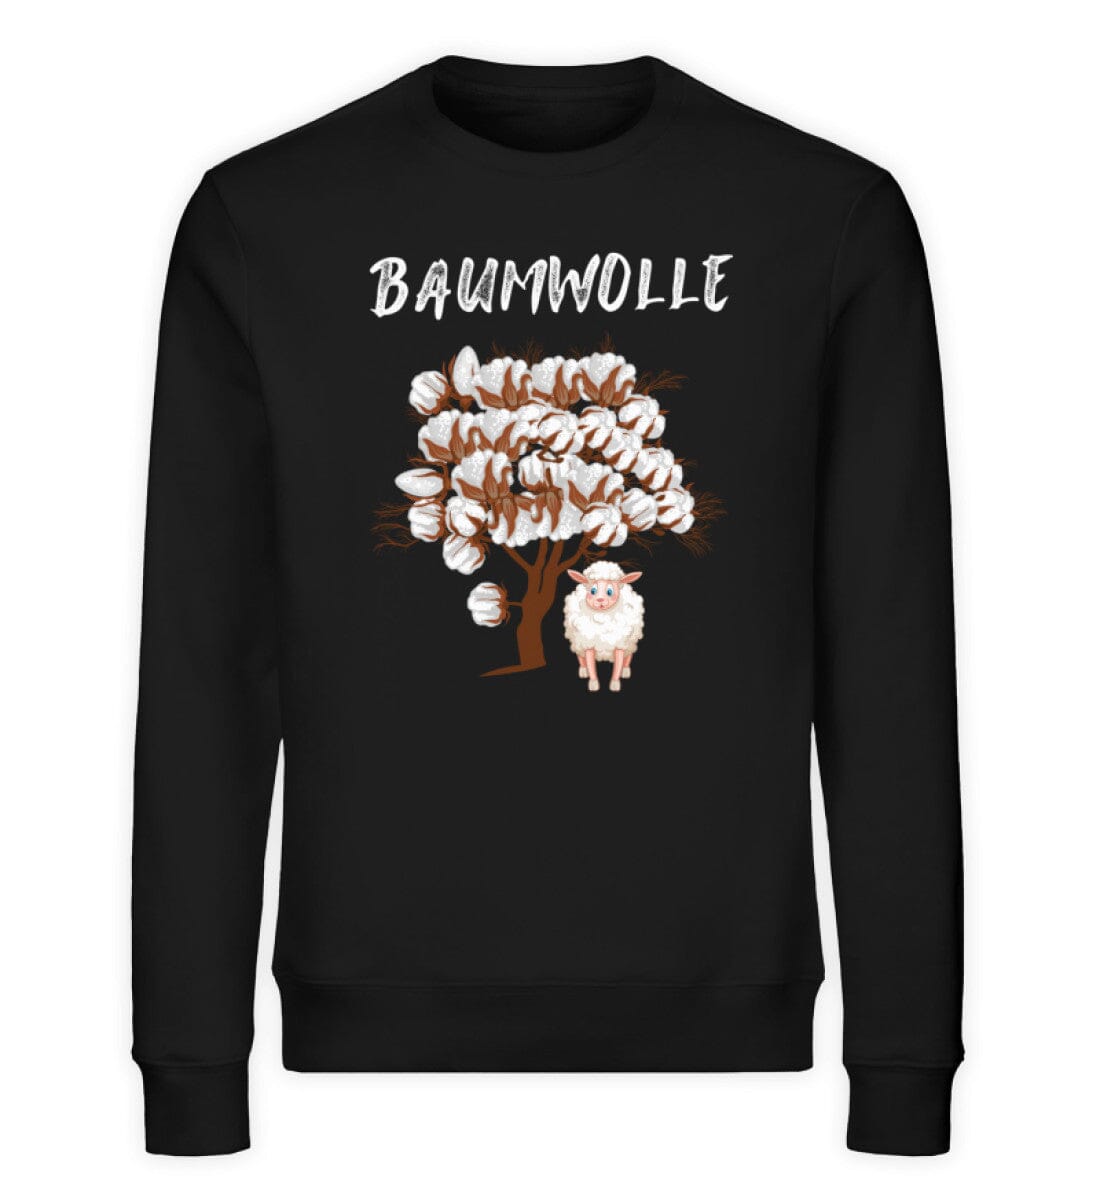 Die Baumwolle - Unisex Bio Sweatshirt Black XS 